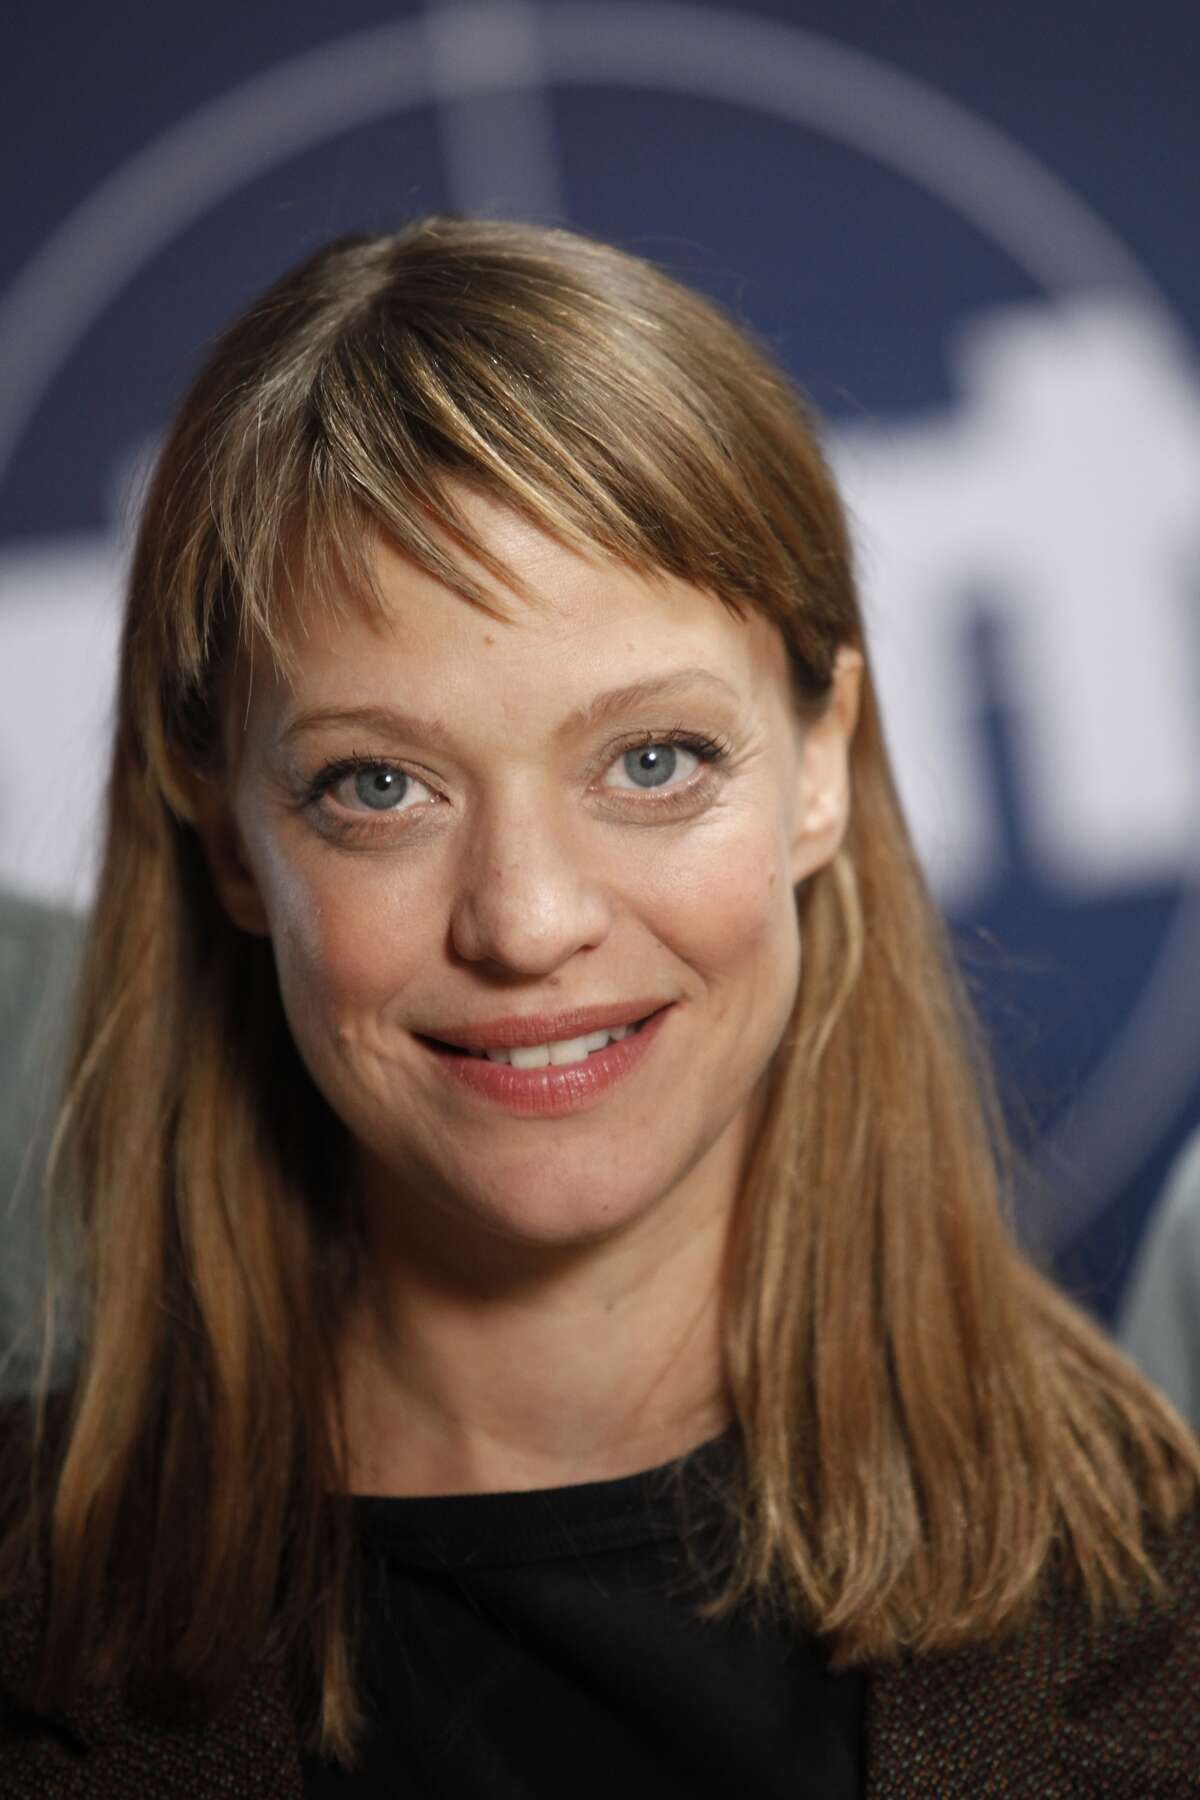 Heike Makatsch played the husband-stealing secretary named Mia.